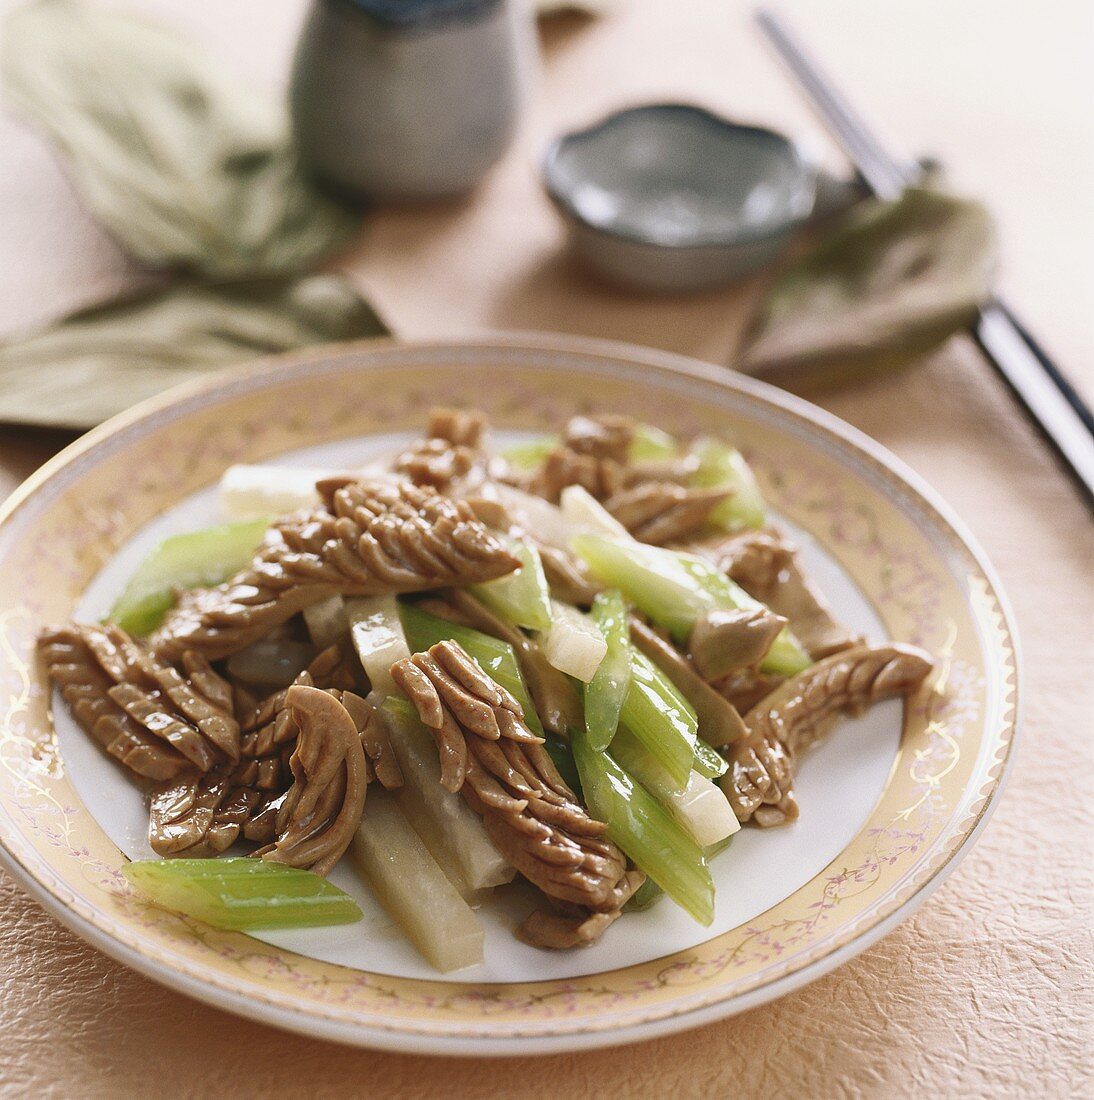 Pork kidneys with yams and celery (China)